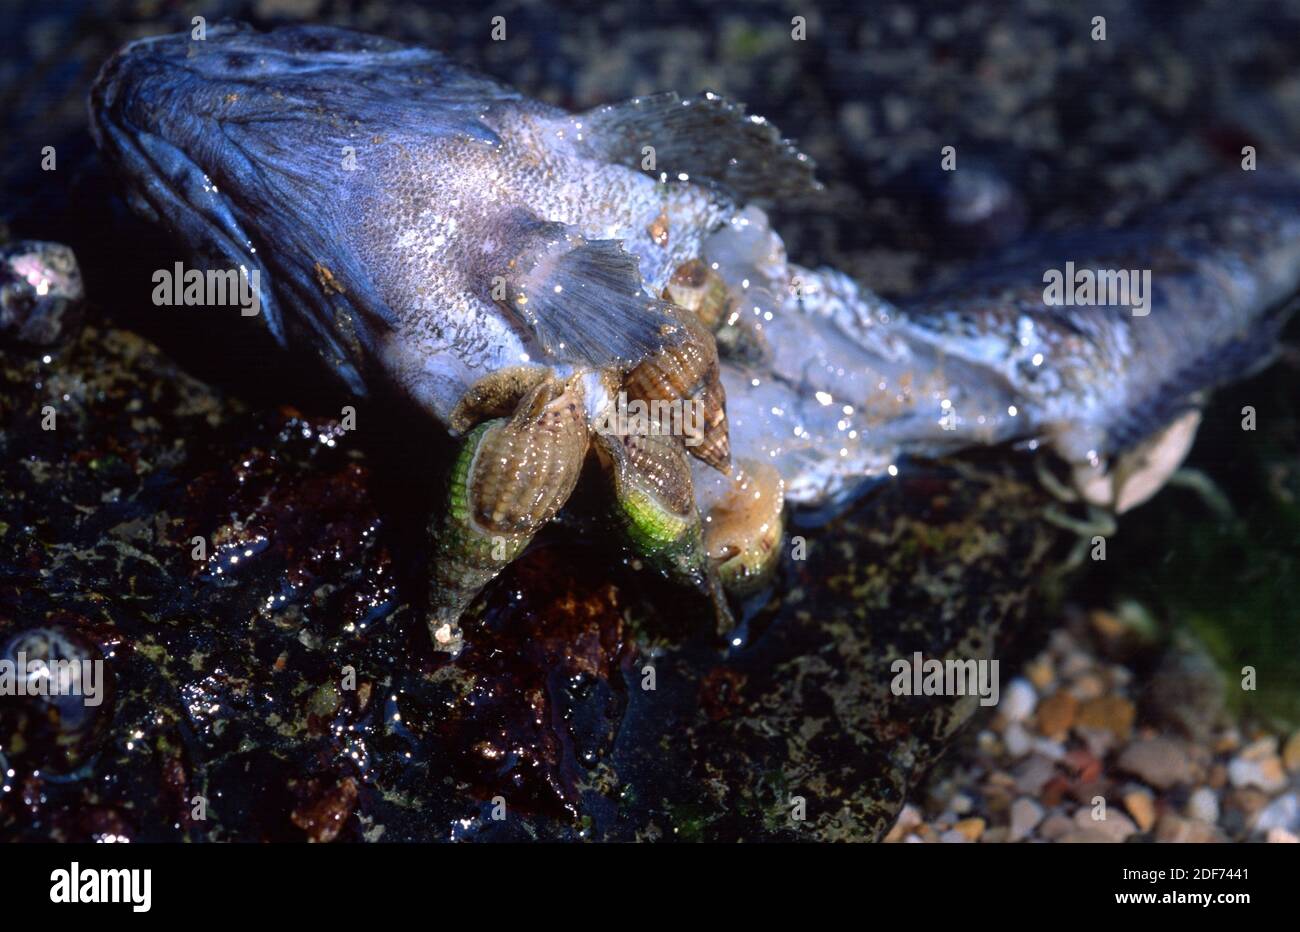 Hinia incrassata o Tritia incrassata es un caracol marino carnívoro. Esta foto fue tomada en San Juan de Luz, Francia. Foto de stock